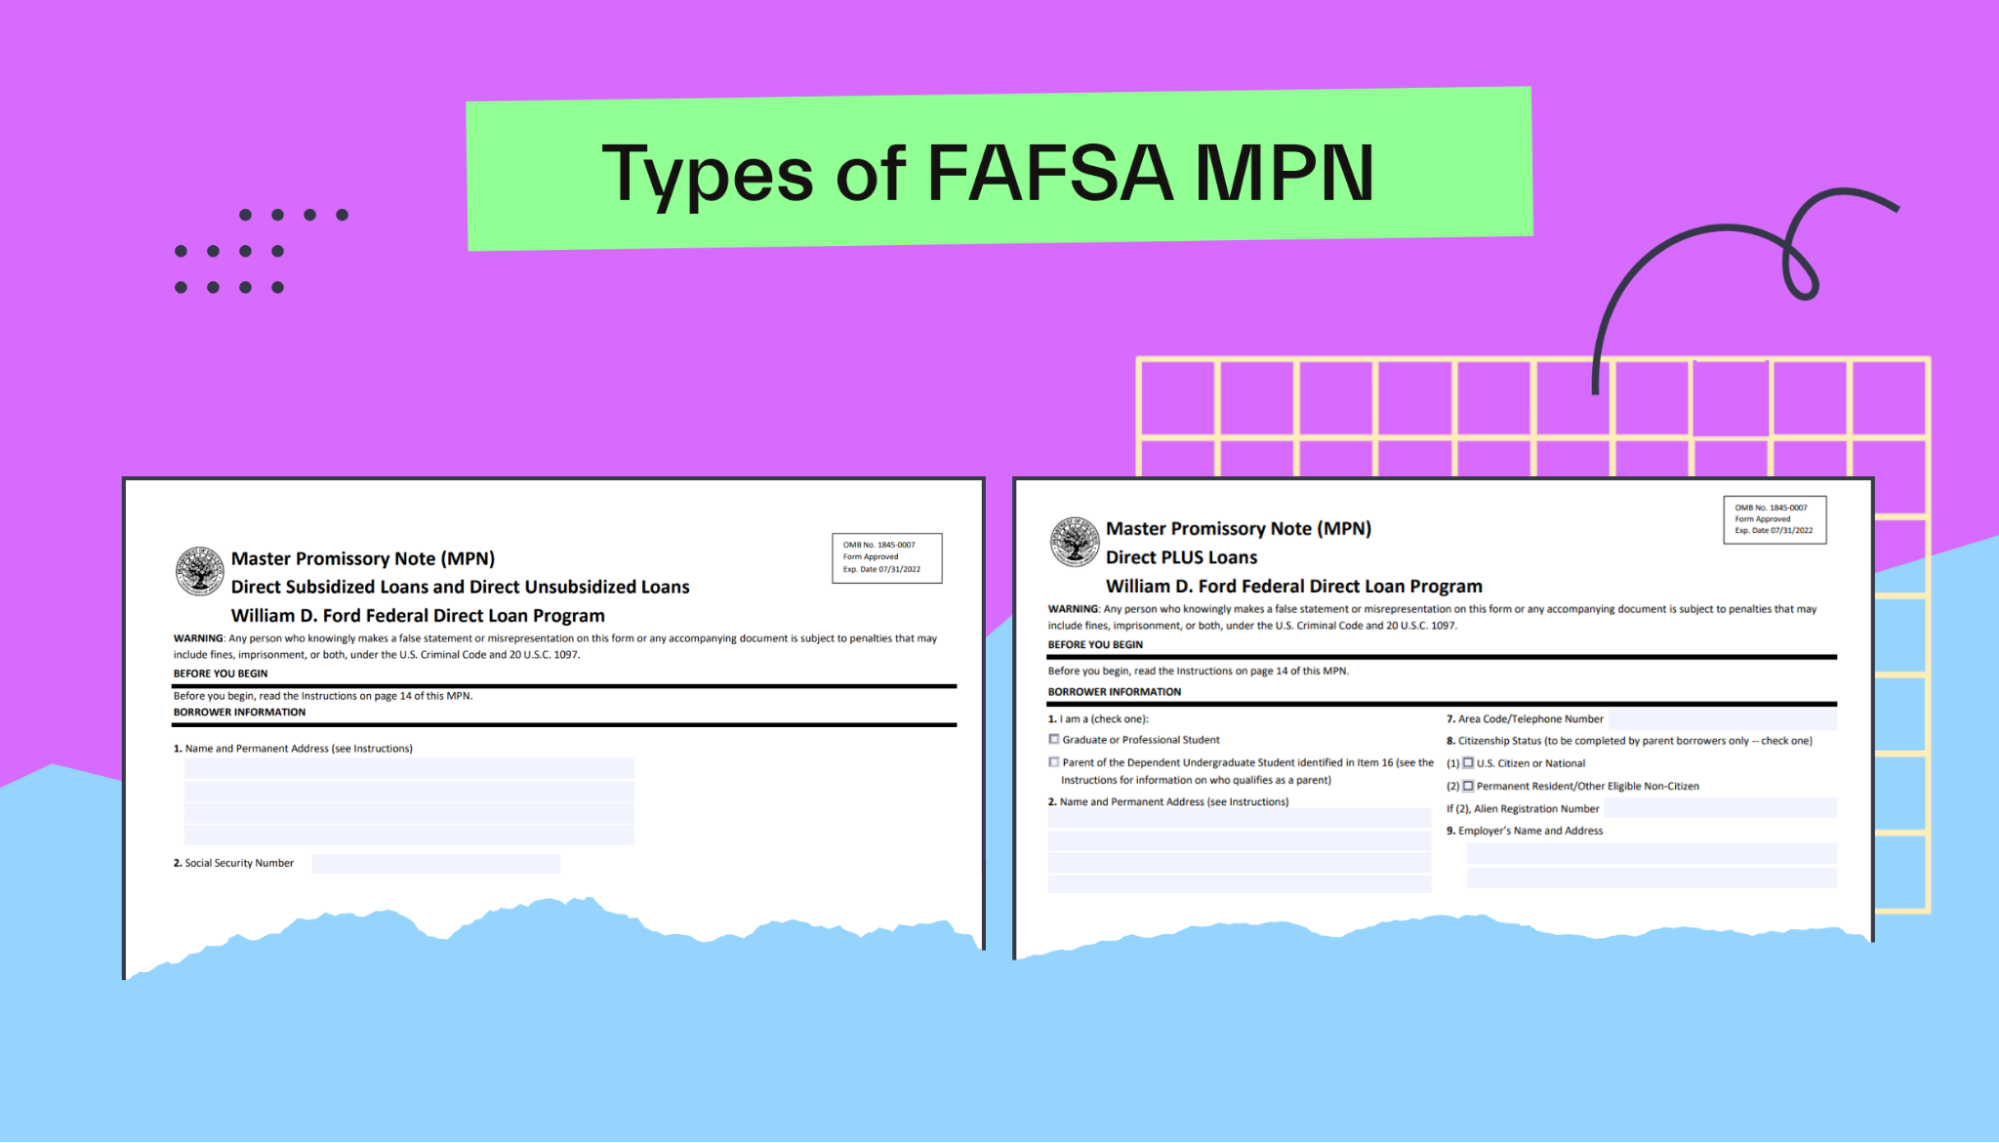 Types of FAFSA MPN